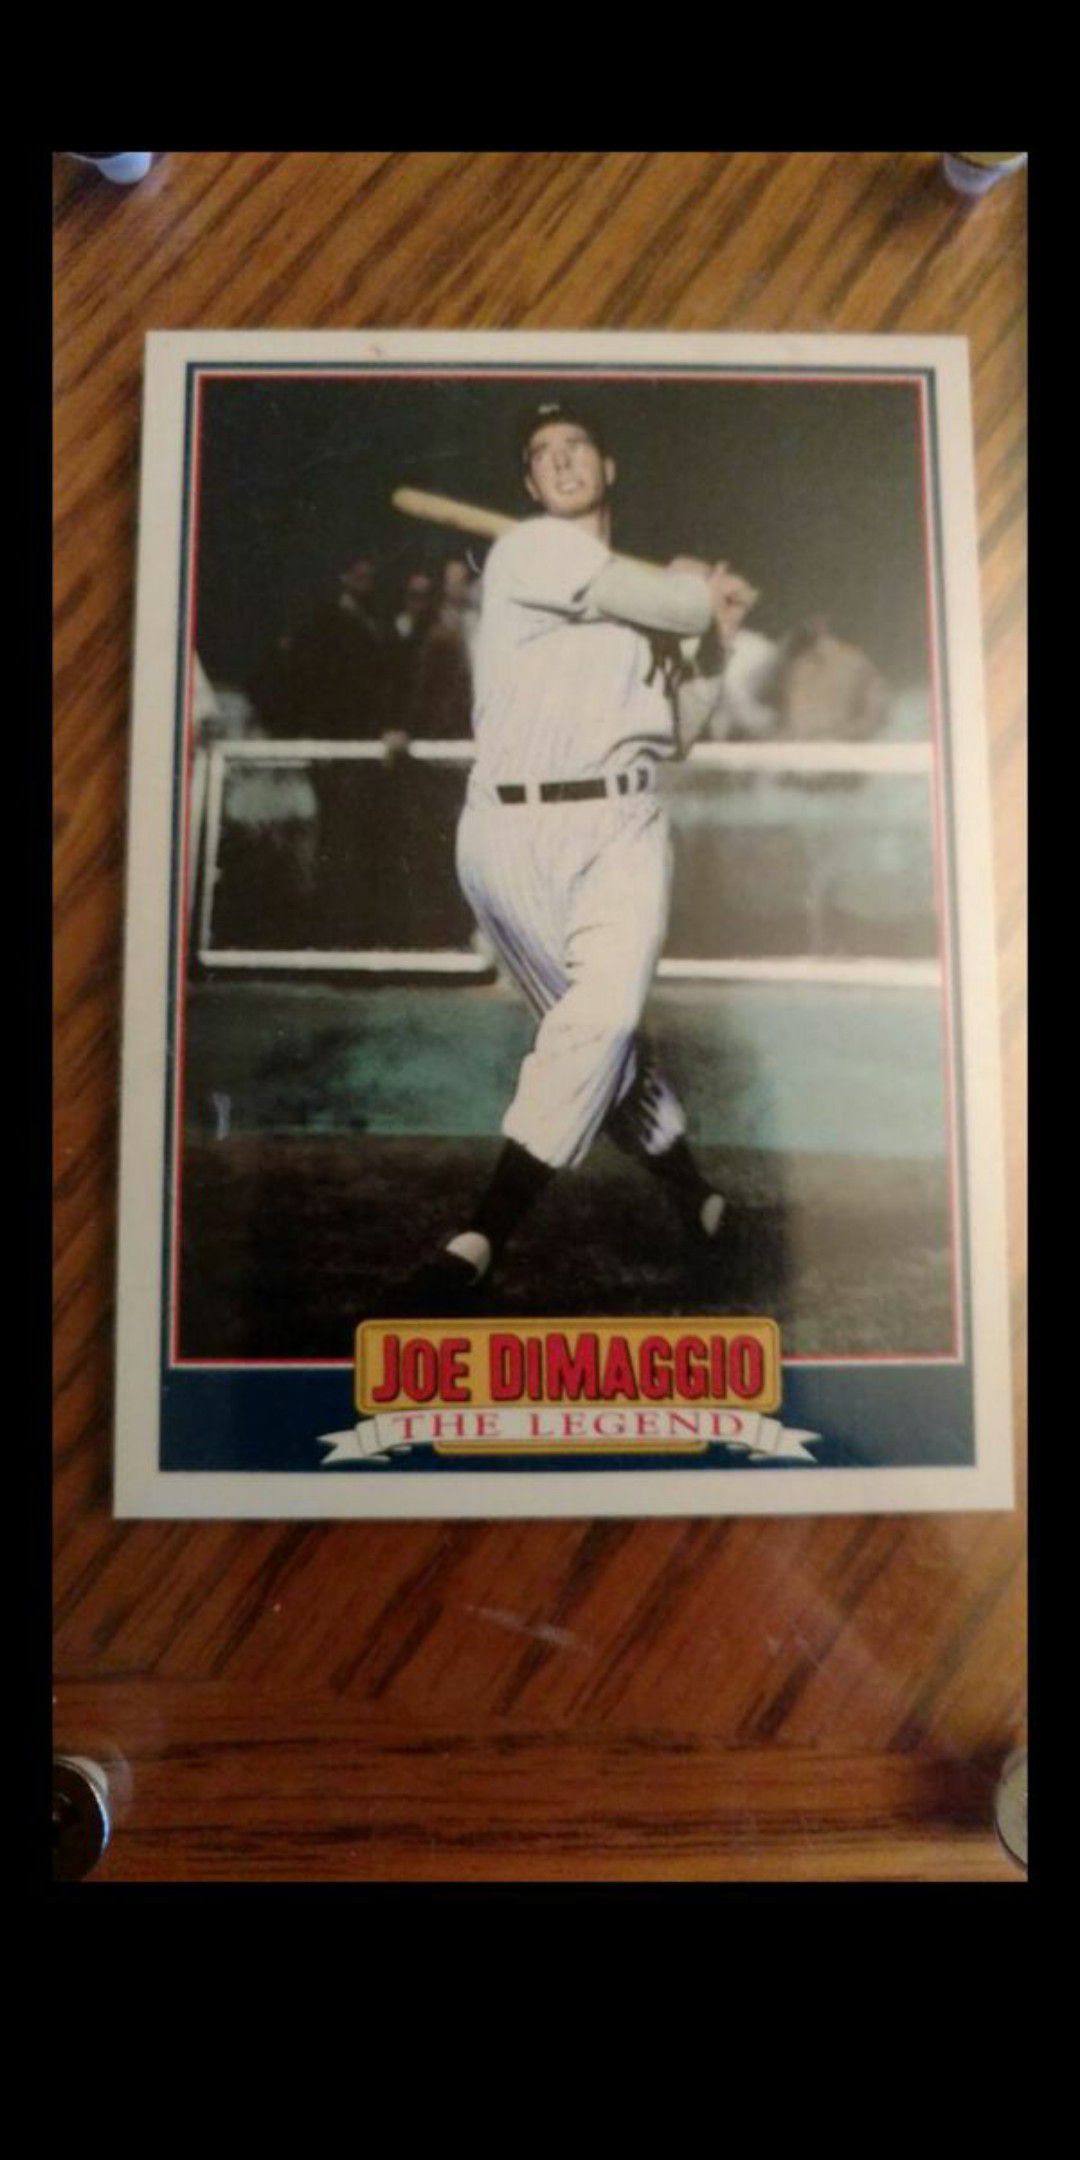 Joe DiMaggio baseball card